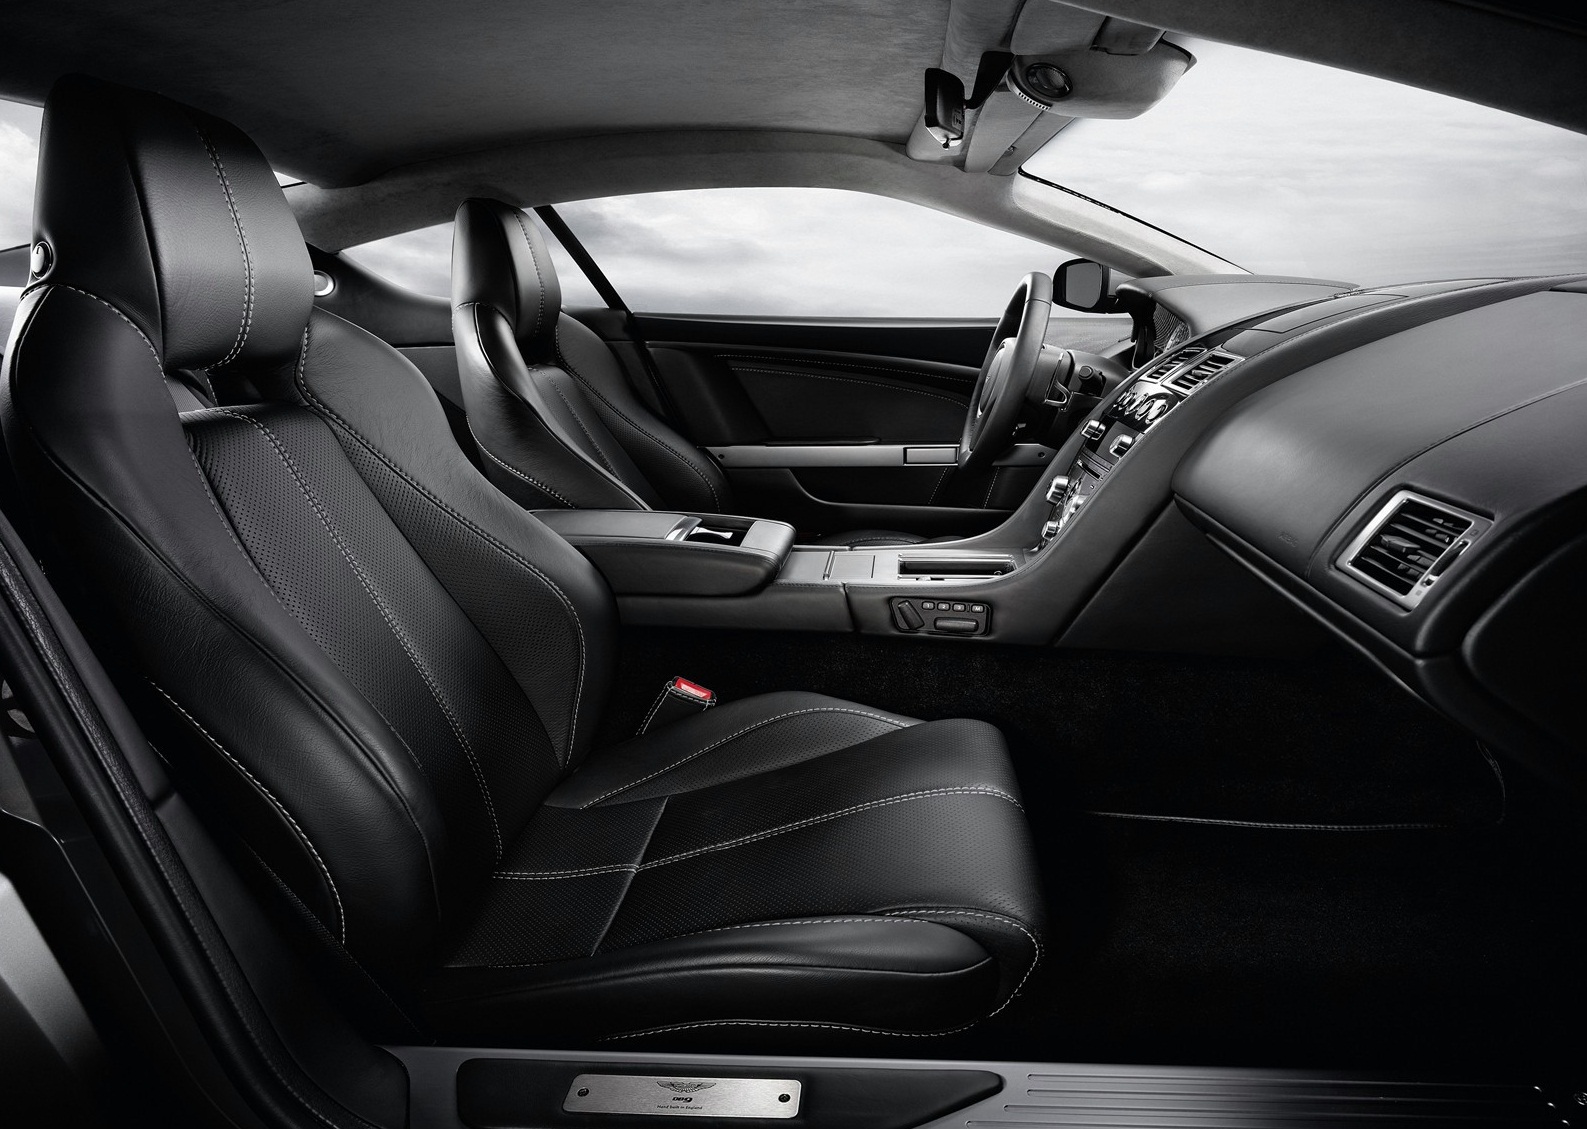 2014 Aston Martin DB9 Interior Dashboard View